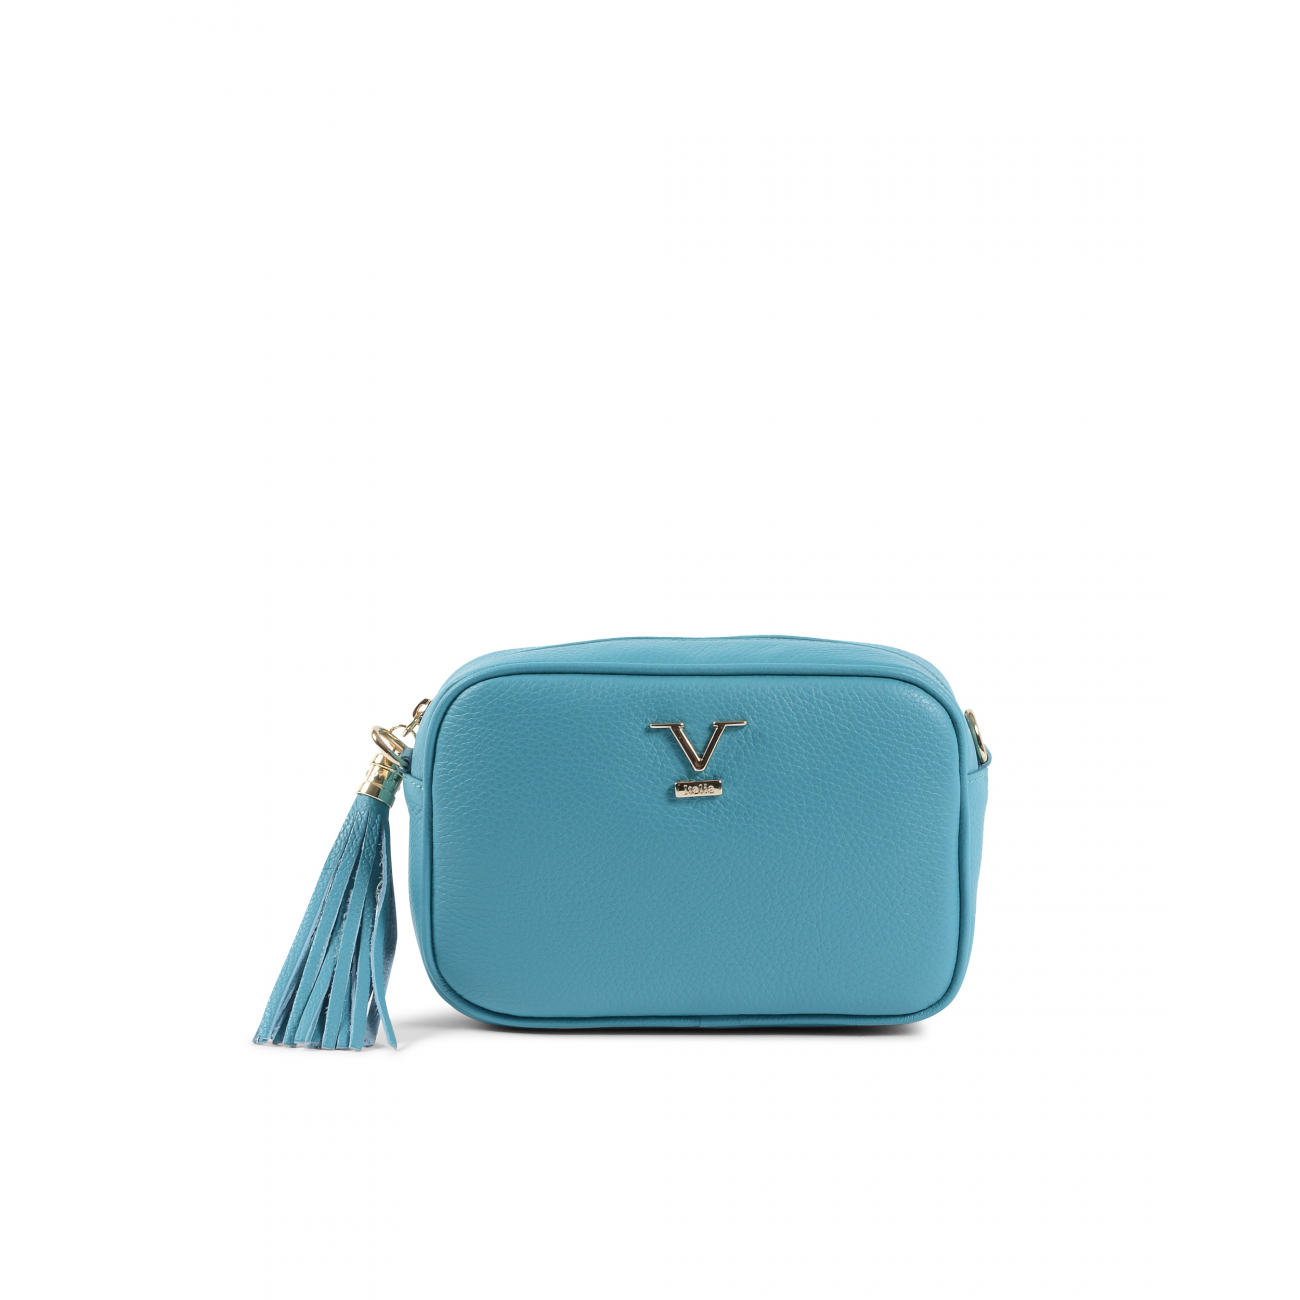 19V69 Italia Womens Handbag Light Blue 10730 DOLLARO TURCHESE